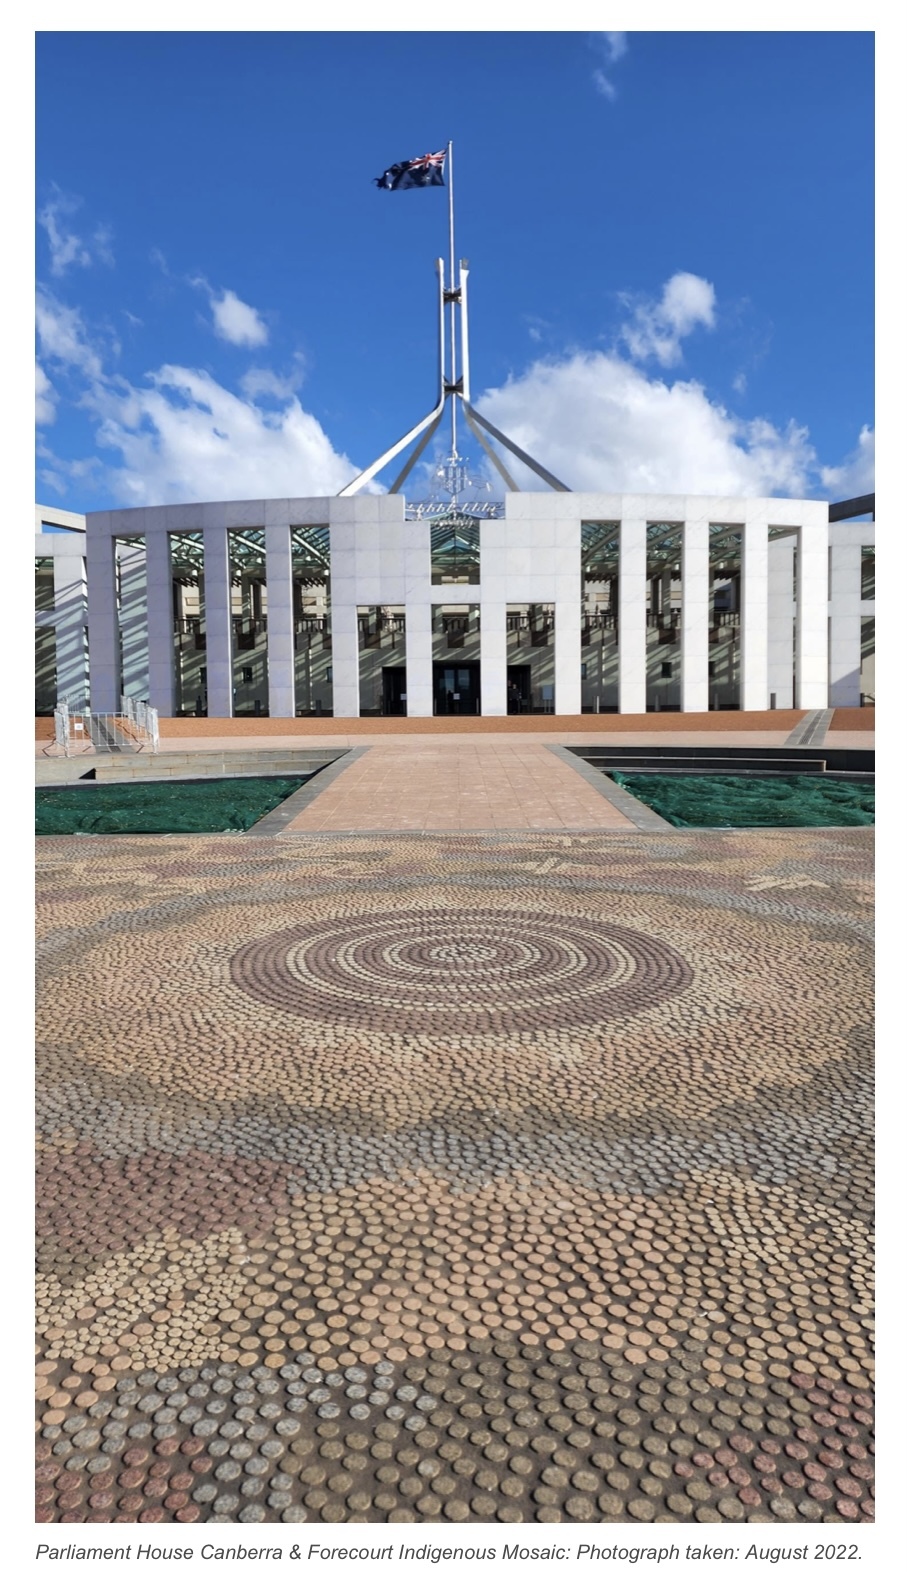 Parliament House Canberra & Forecourt Indigenous Mosaic: Photograph taken: August 2022.